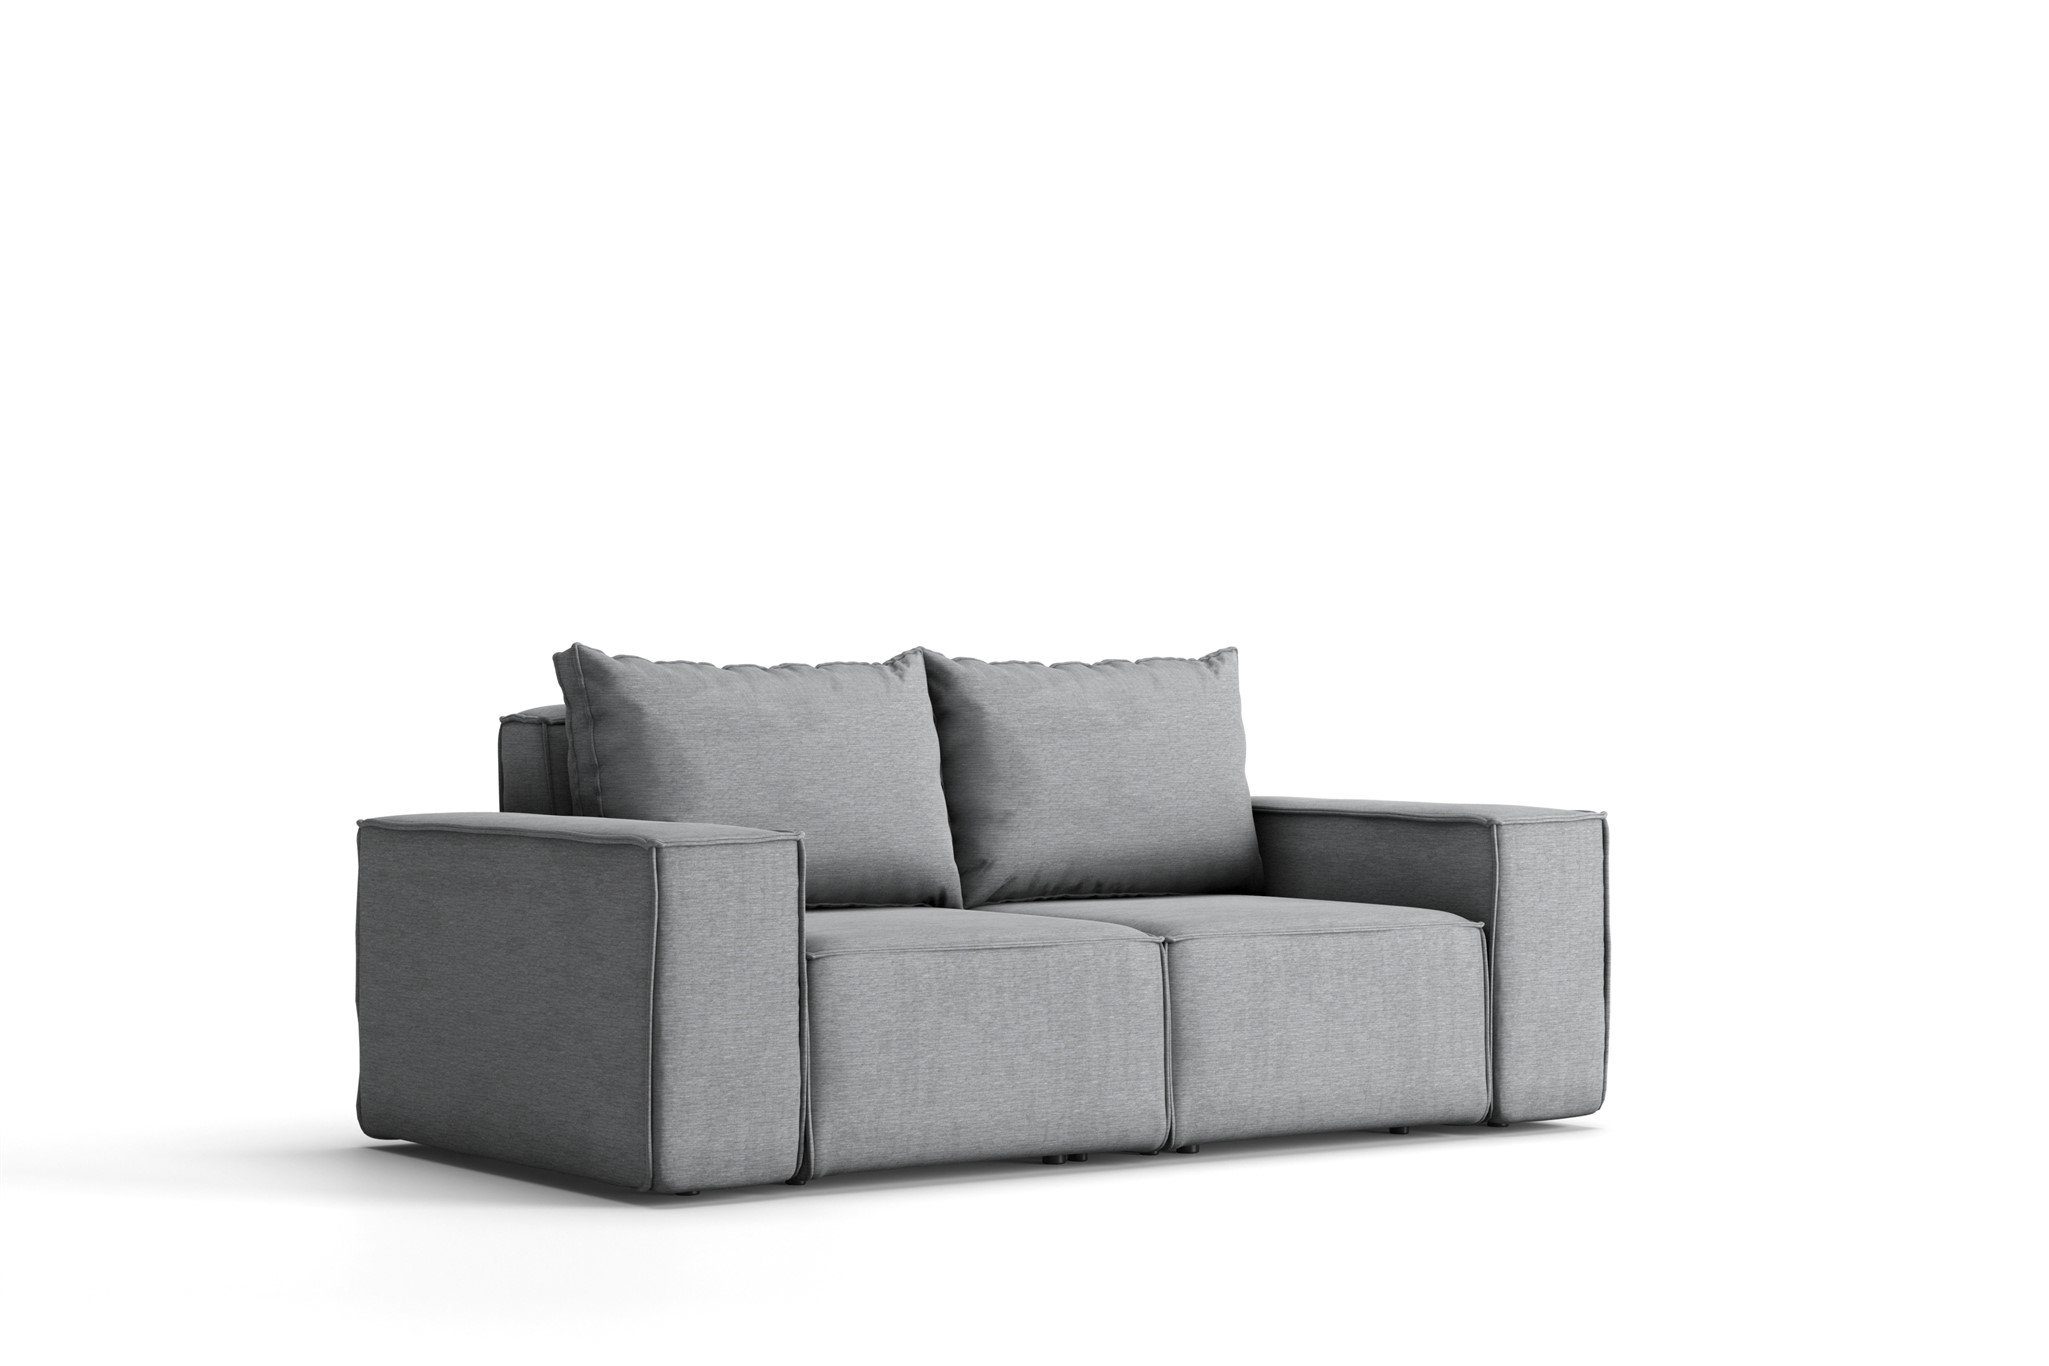 Beliebt ausverkauft Fun Möbel Loungesofa Gartenmöbel Grau wetterfester GARDENT, 2-Sitzer Stoff NXL Sofa